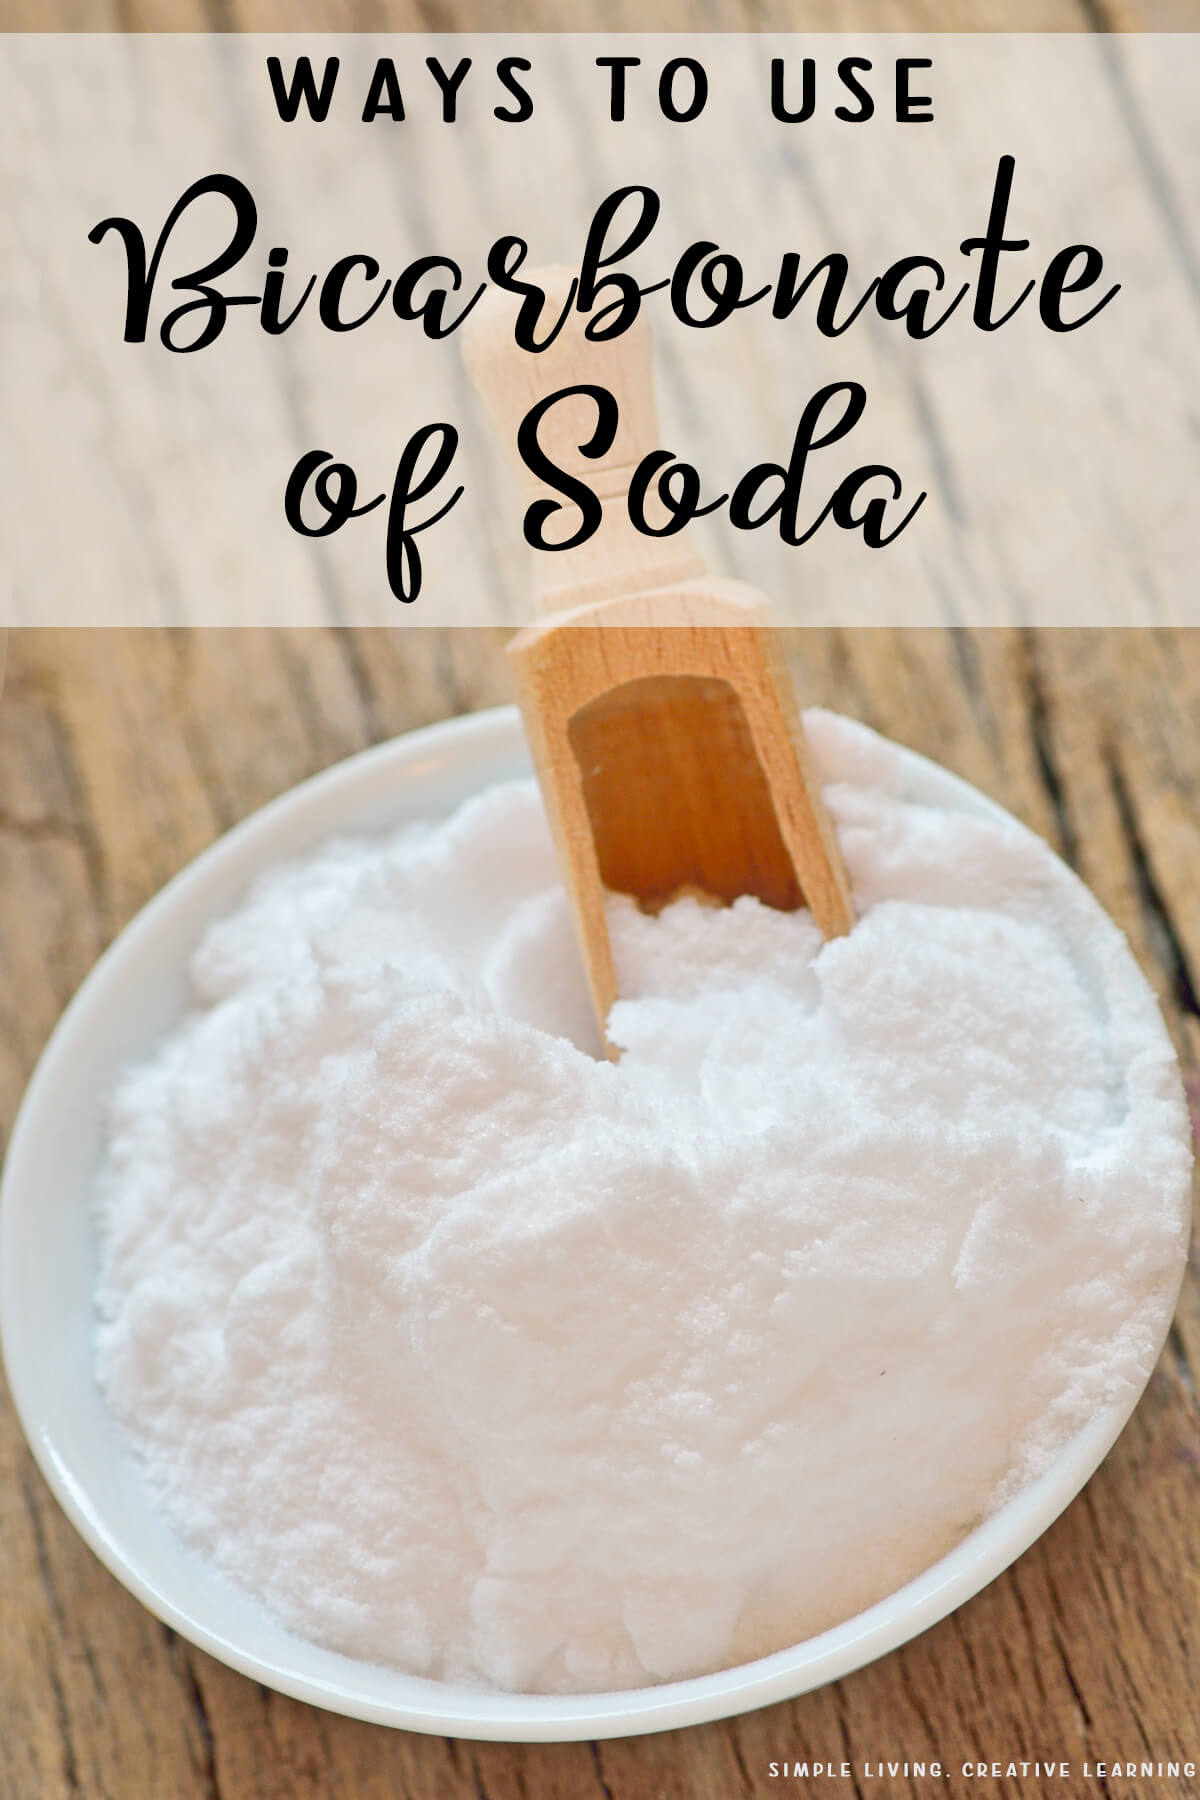 Ways to Use Bicarbonate of Soda